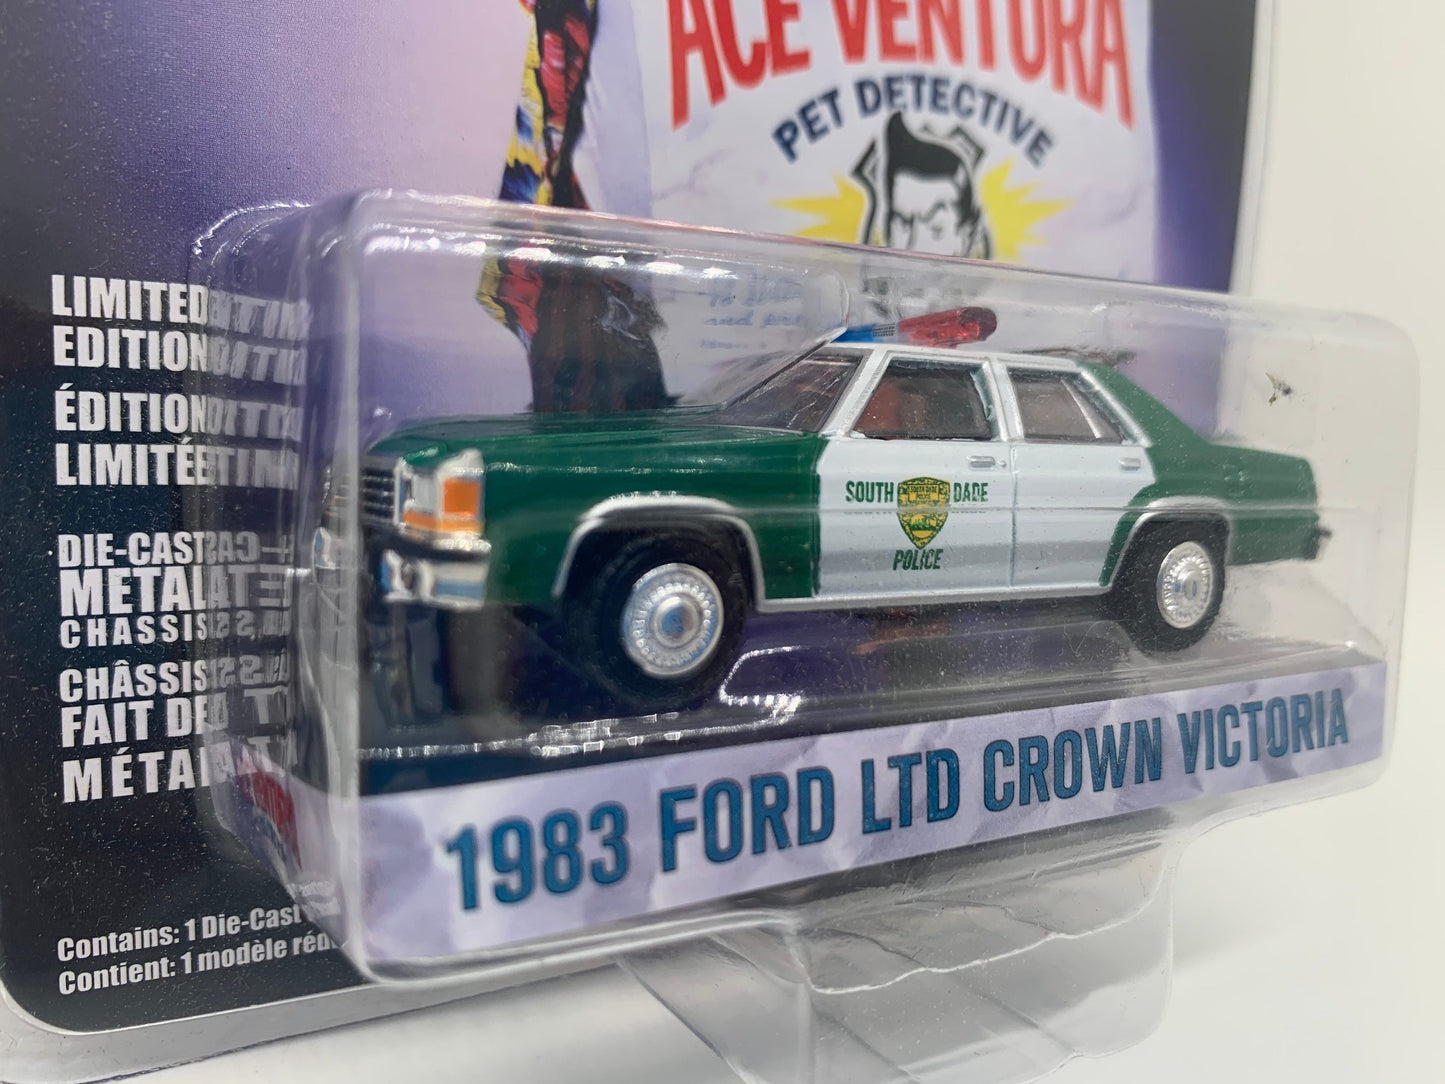 1983 Ford LTD Crown Victoria - South Dade Police - Ace Ventura Pet Detective - Jim Carrey - Diecast Vintage - Greenlight Car - Greenlight